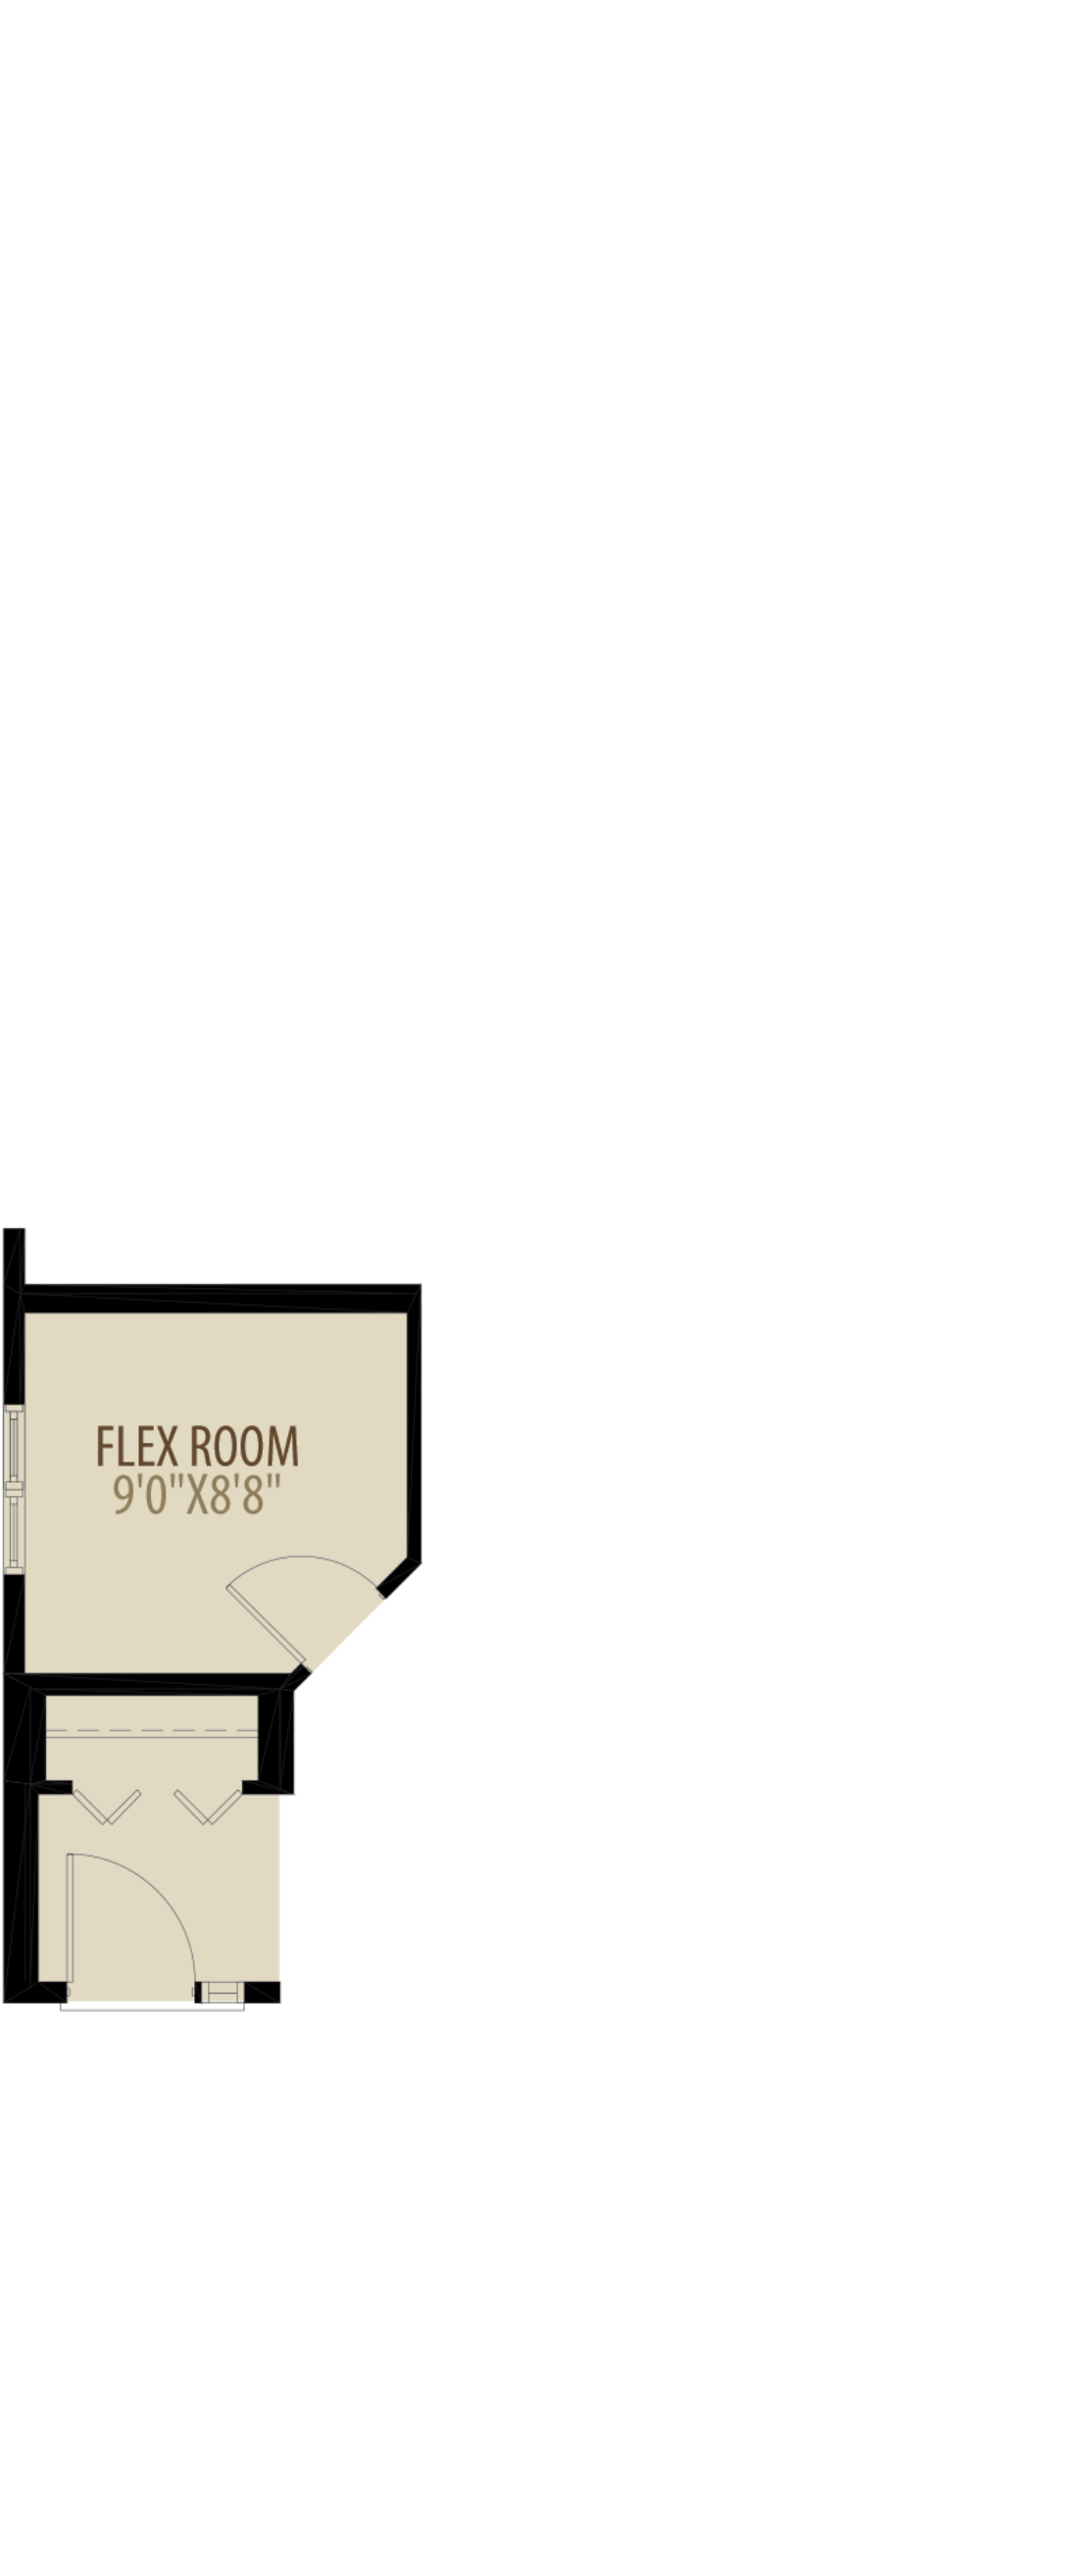 Option 5 Enclosed Flex Room